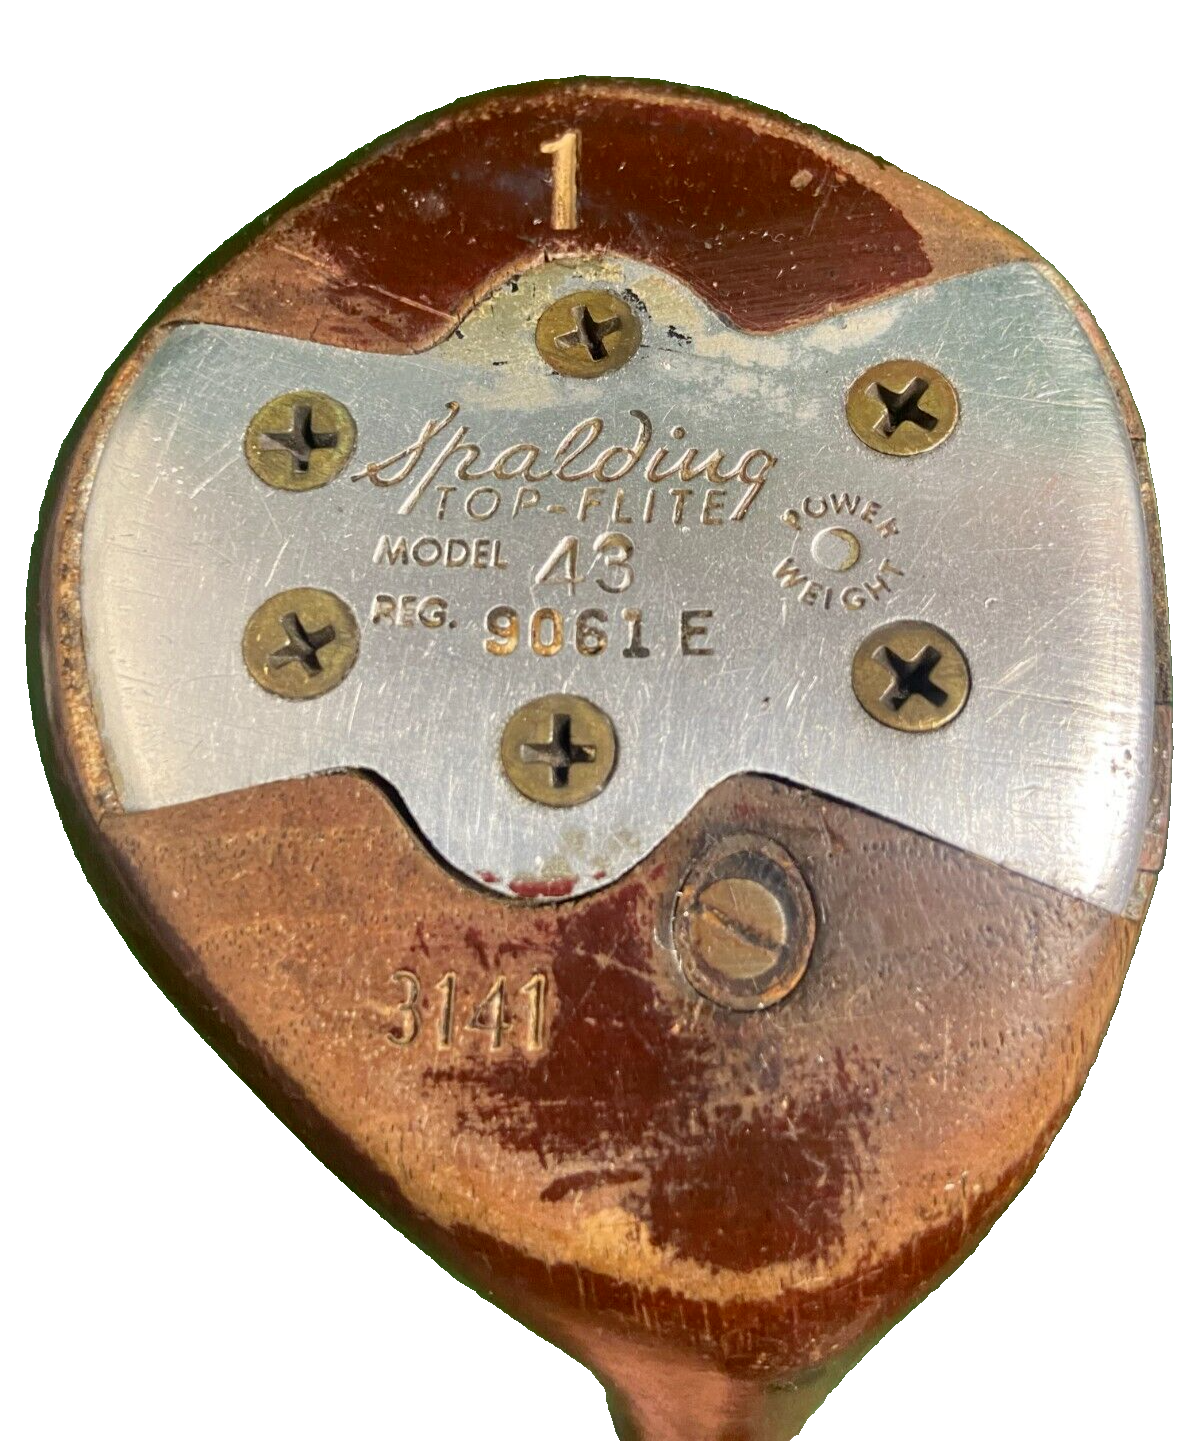 Primary image for Spalding Top-Flite Model 43 Persimmon Driver 9061E Rocket Steel 43" Vintage RH